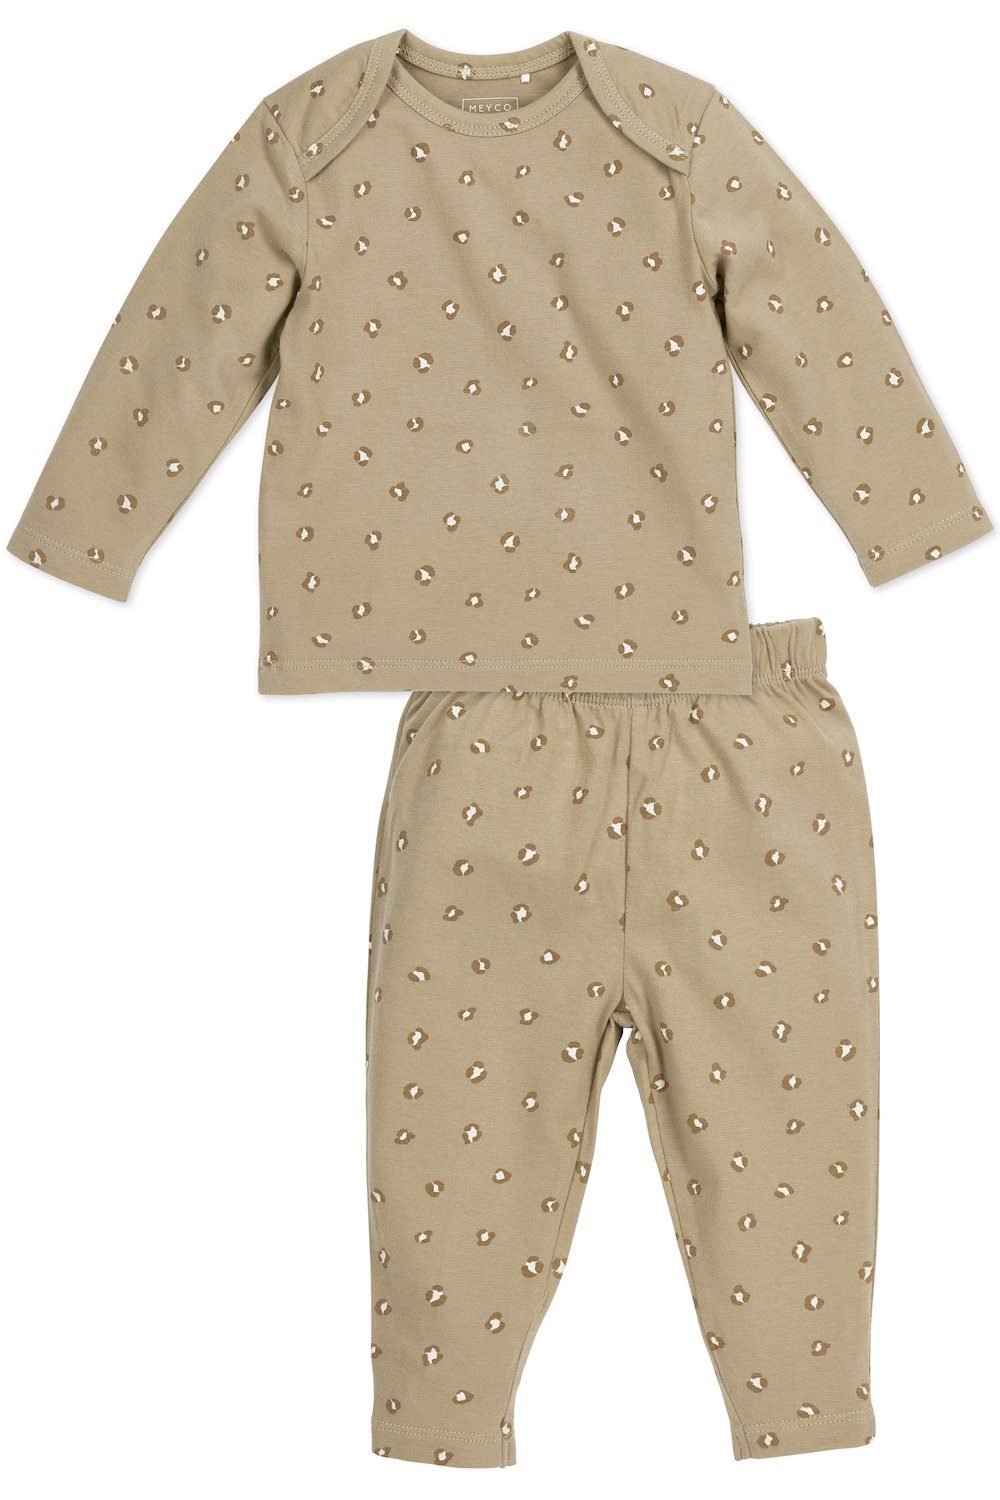 Panther Mini Meyco Sand 50/56 Baby tlg) Pyjama (1